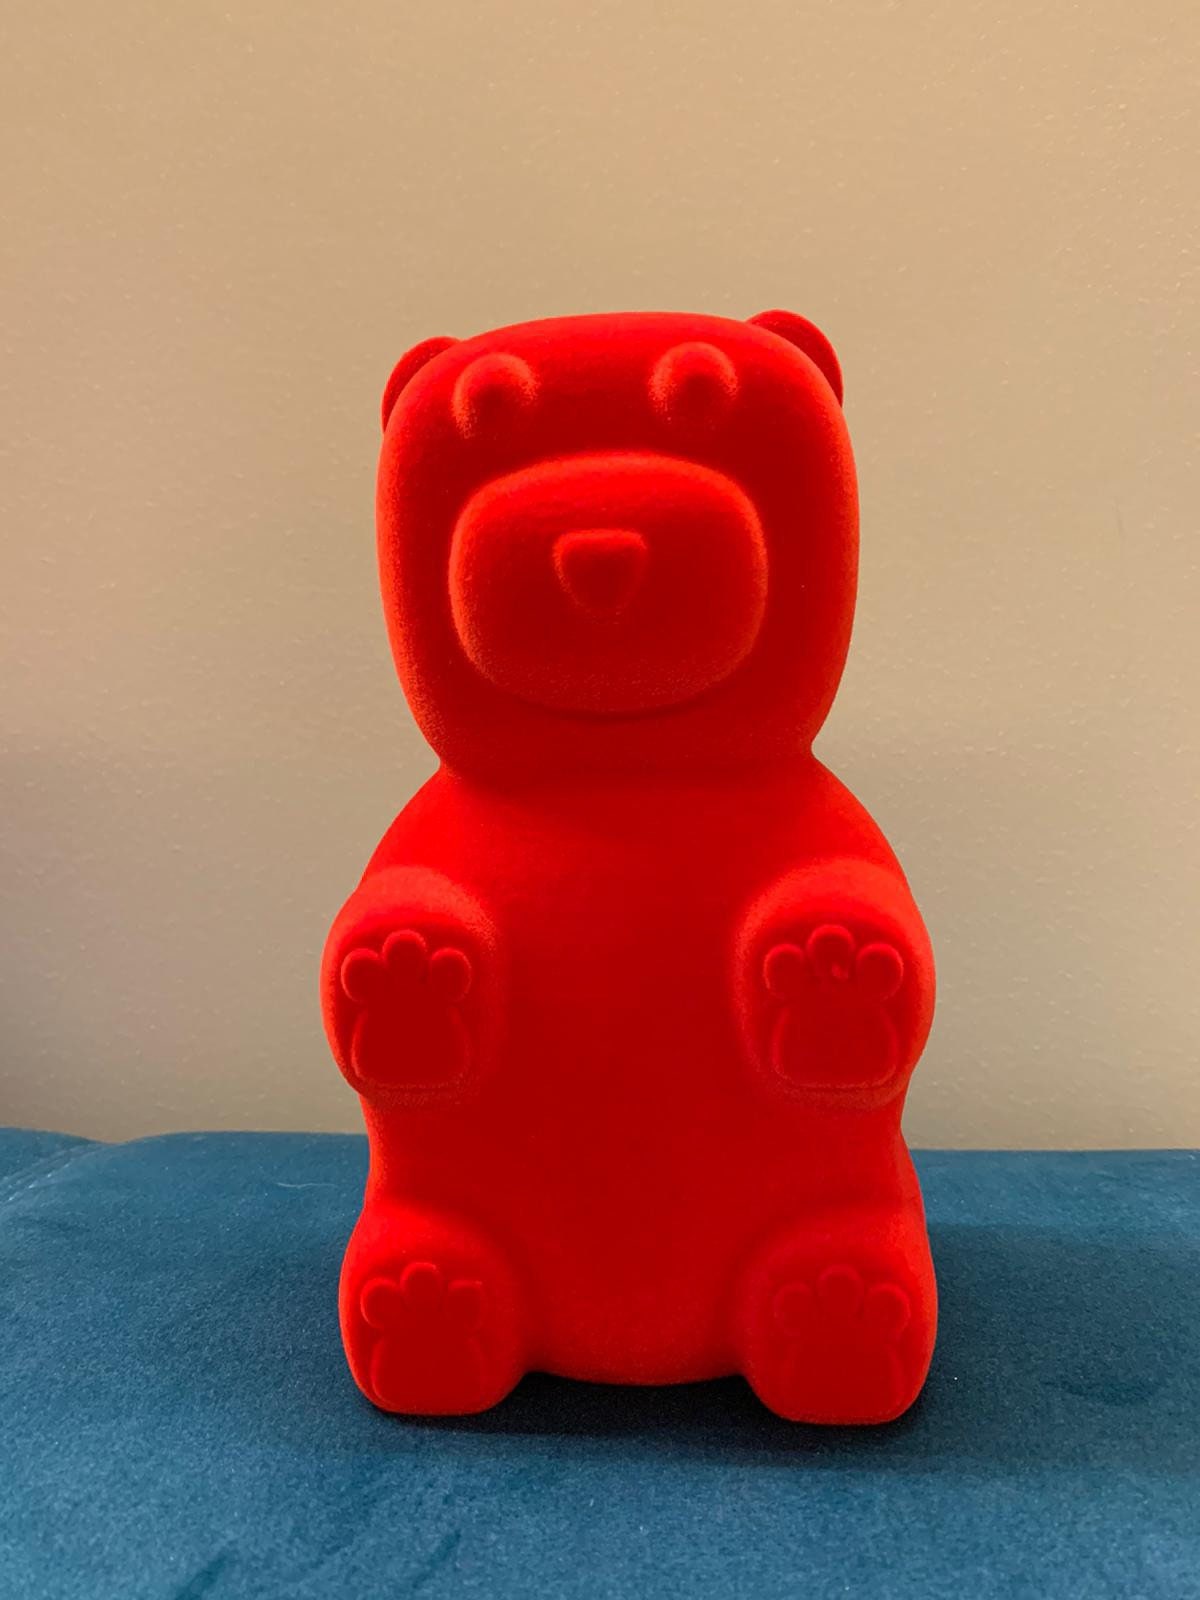 3D Gummy Bears 3pc Set